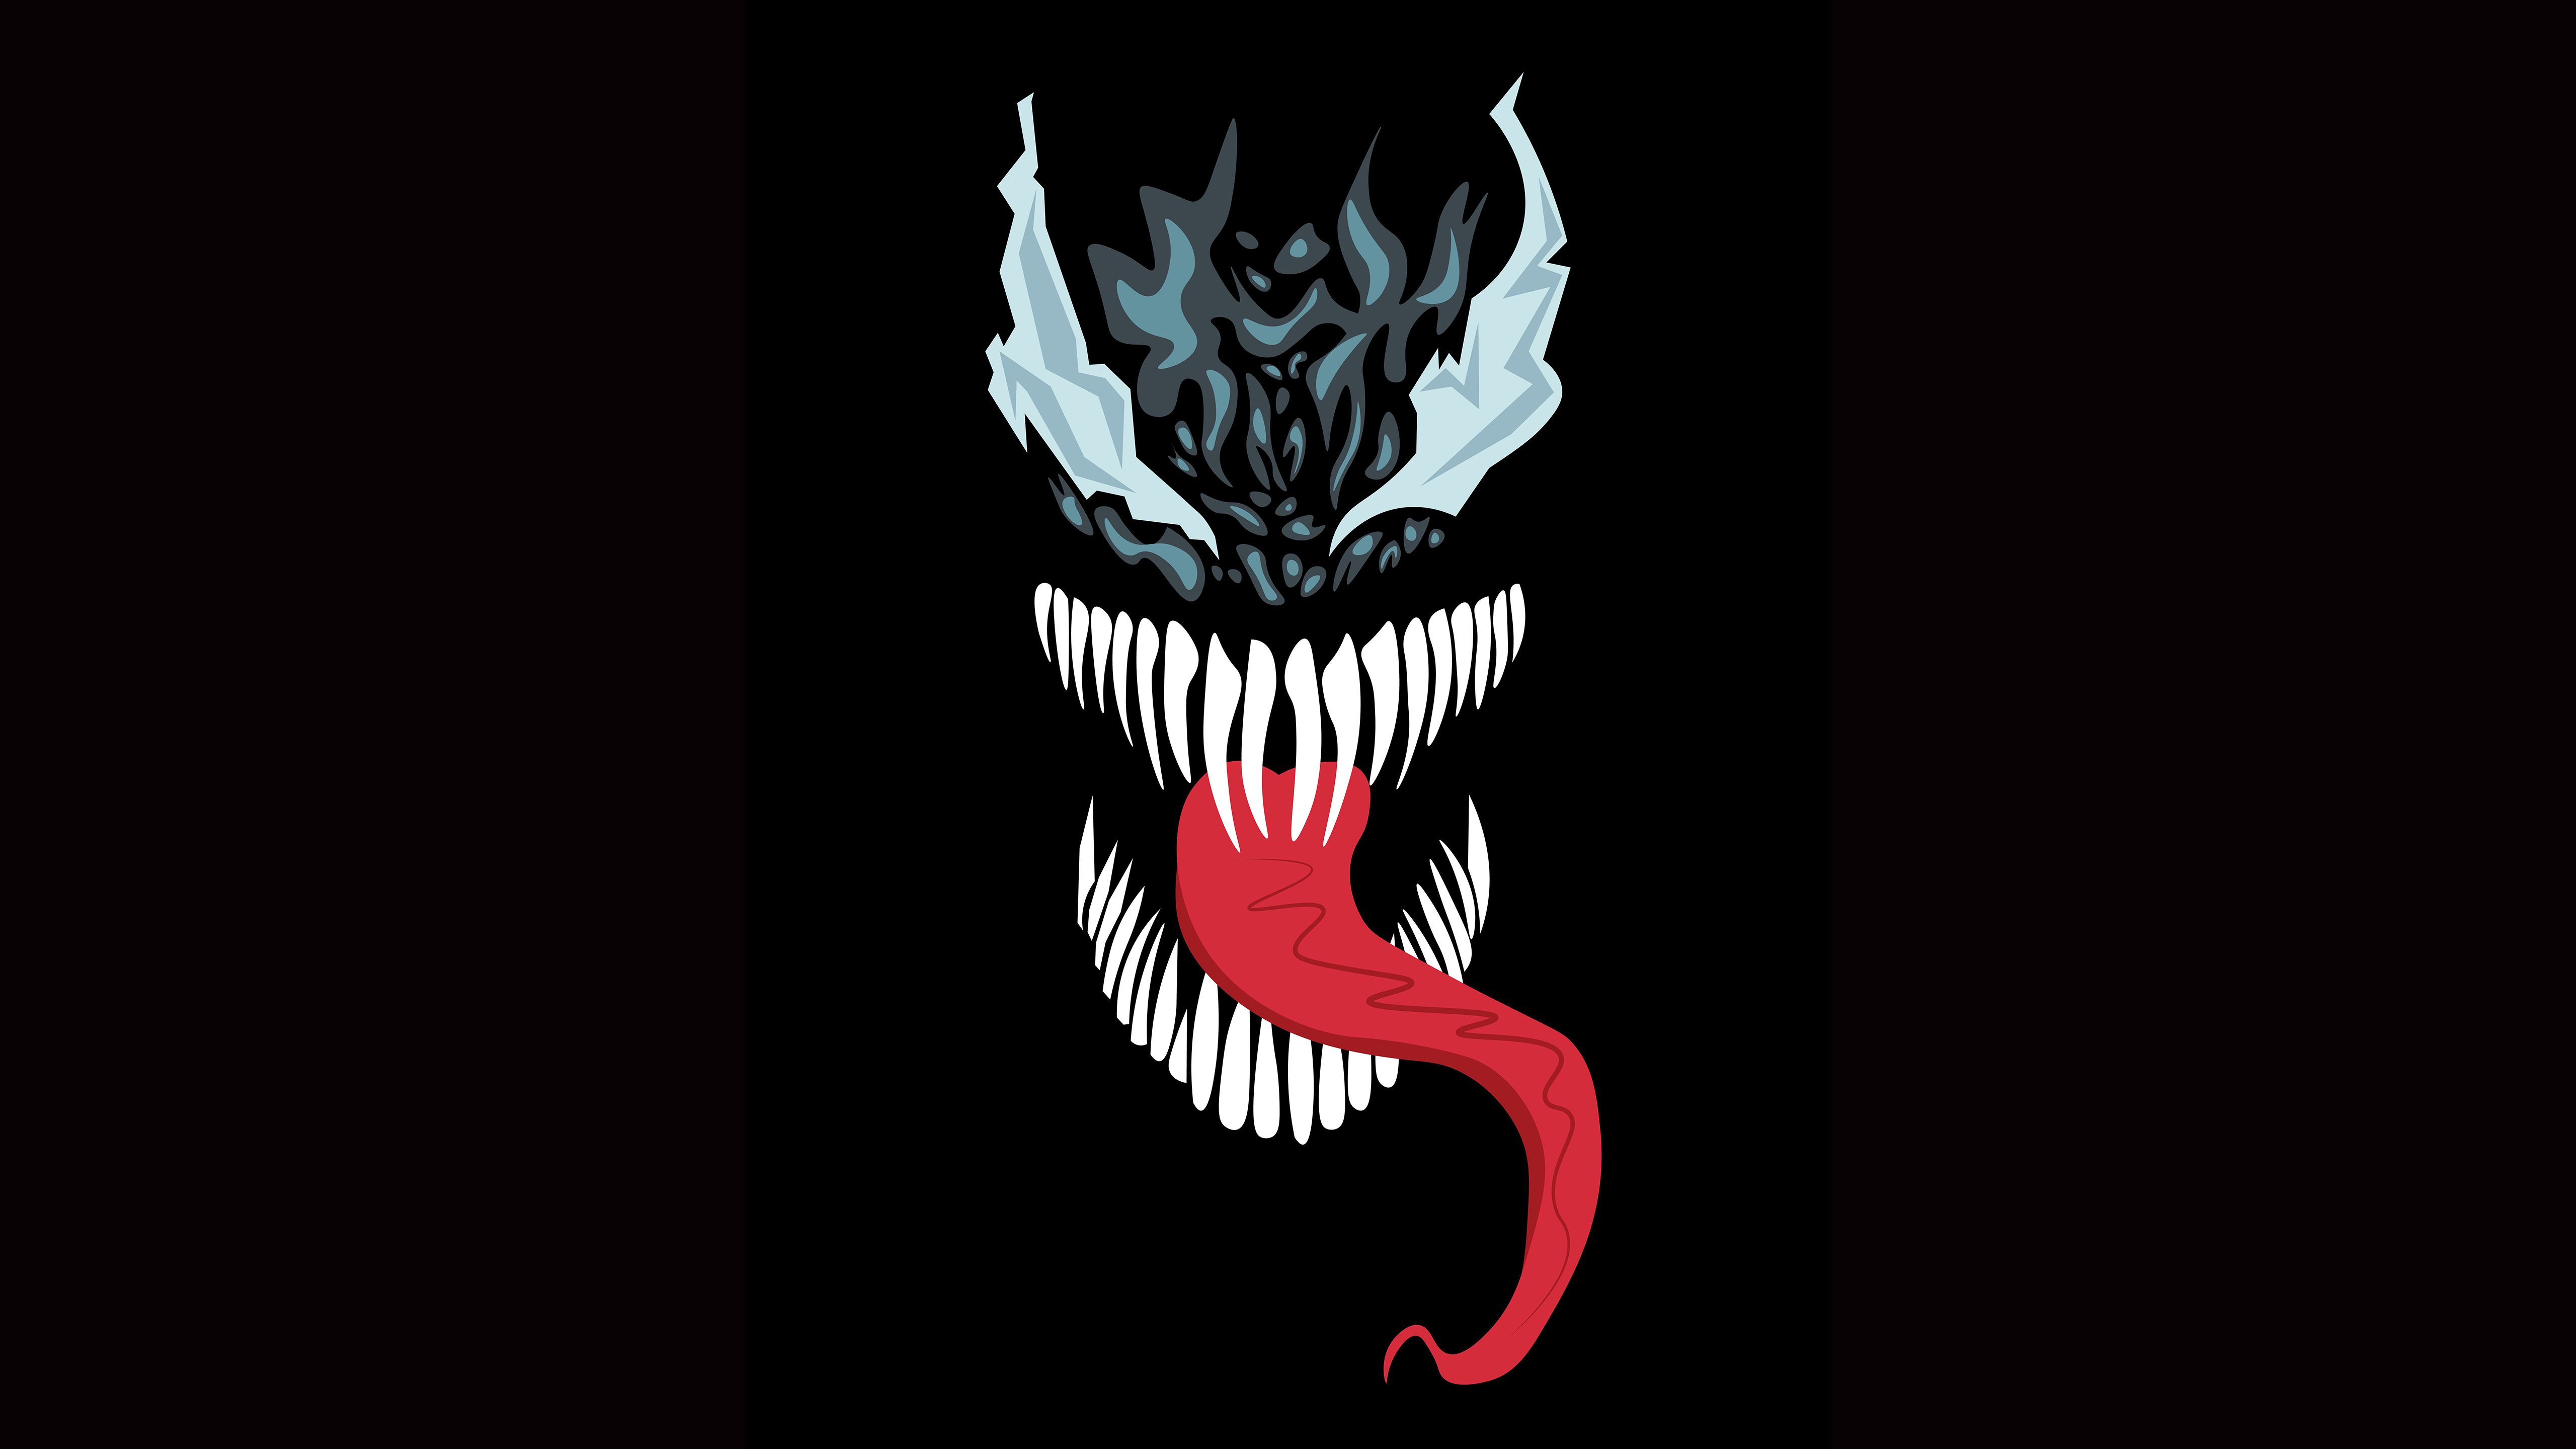 Venom Oled Illustration 5k Wallpaper and Background Image